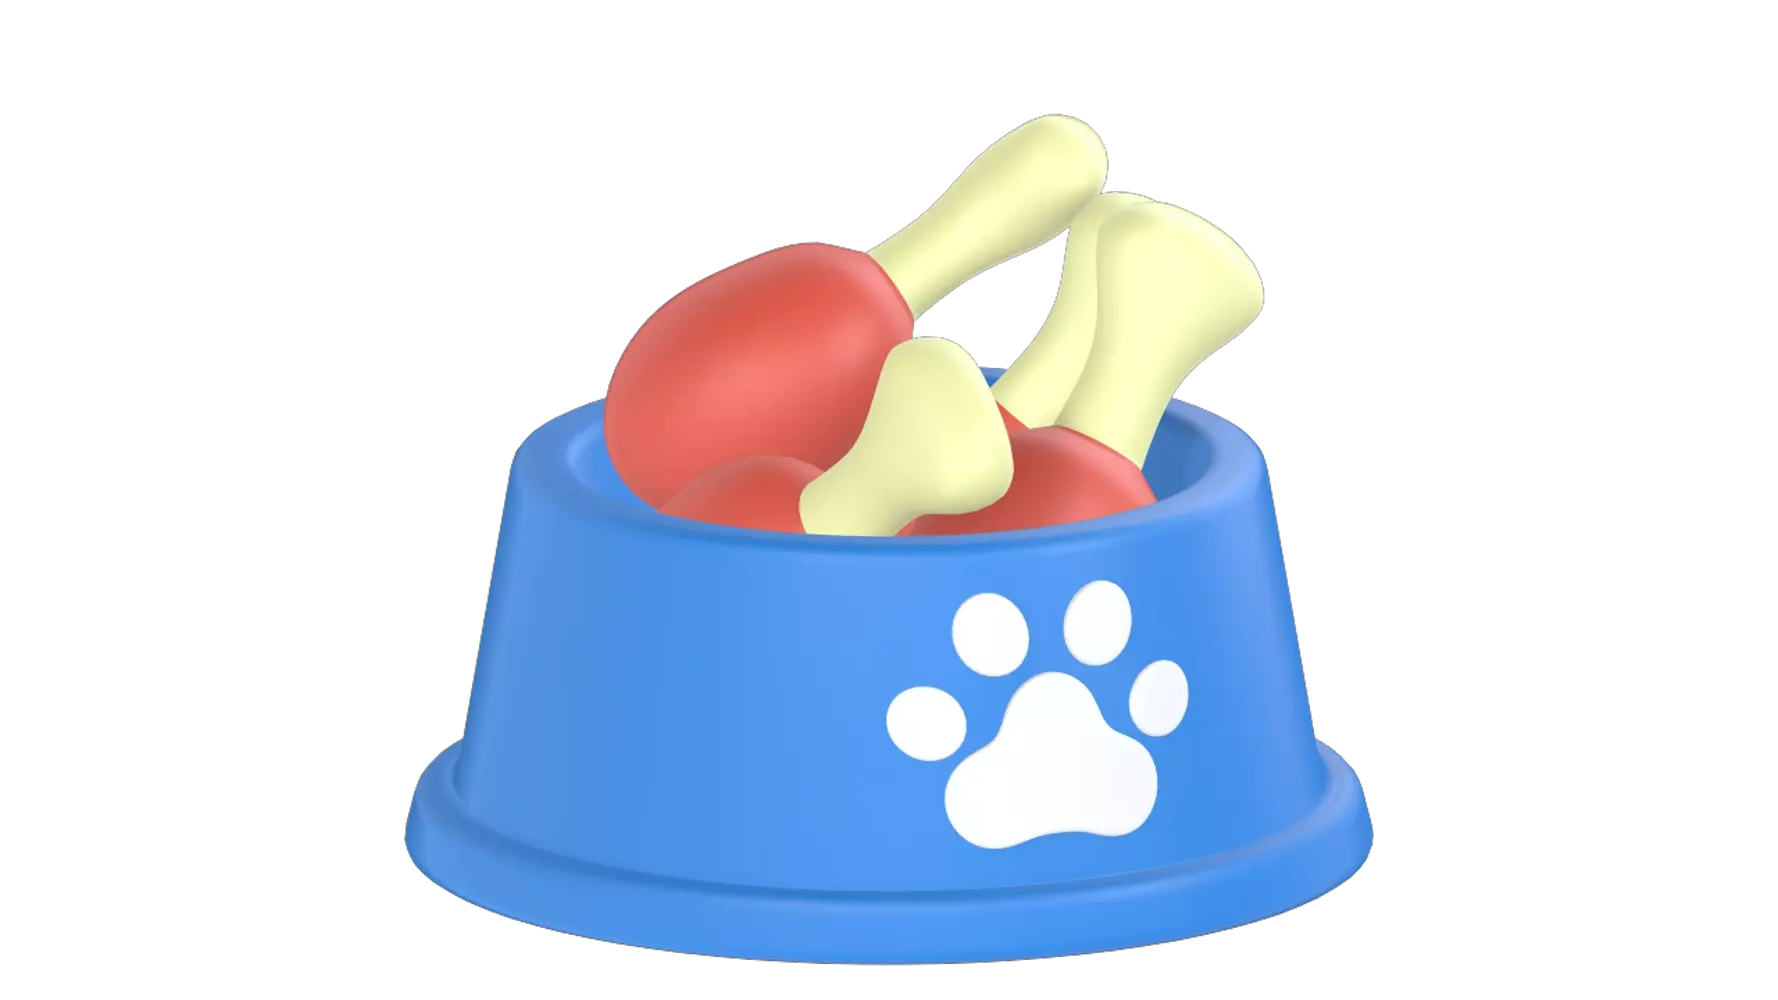 Pet Food 3D Graphic